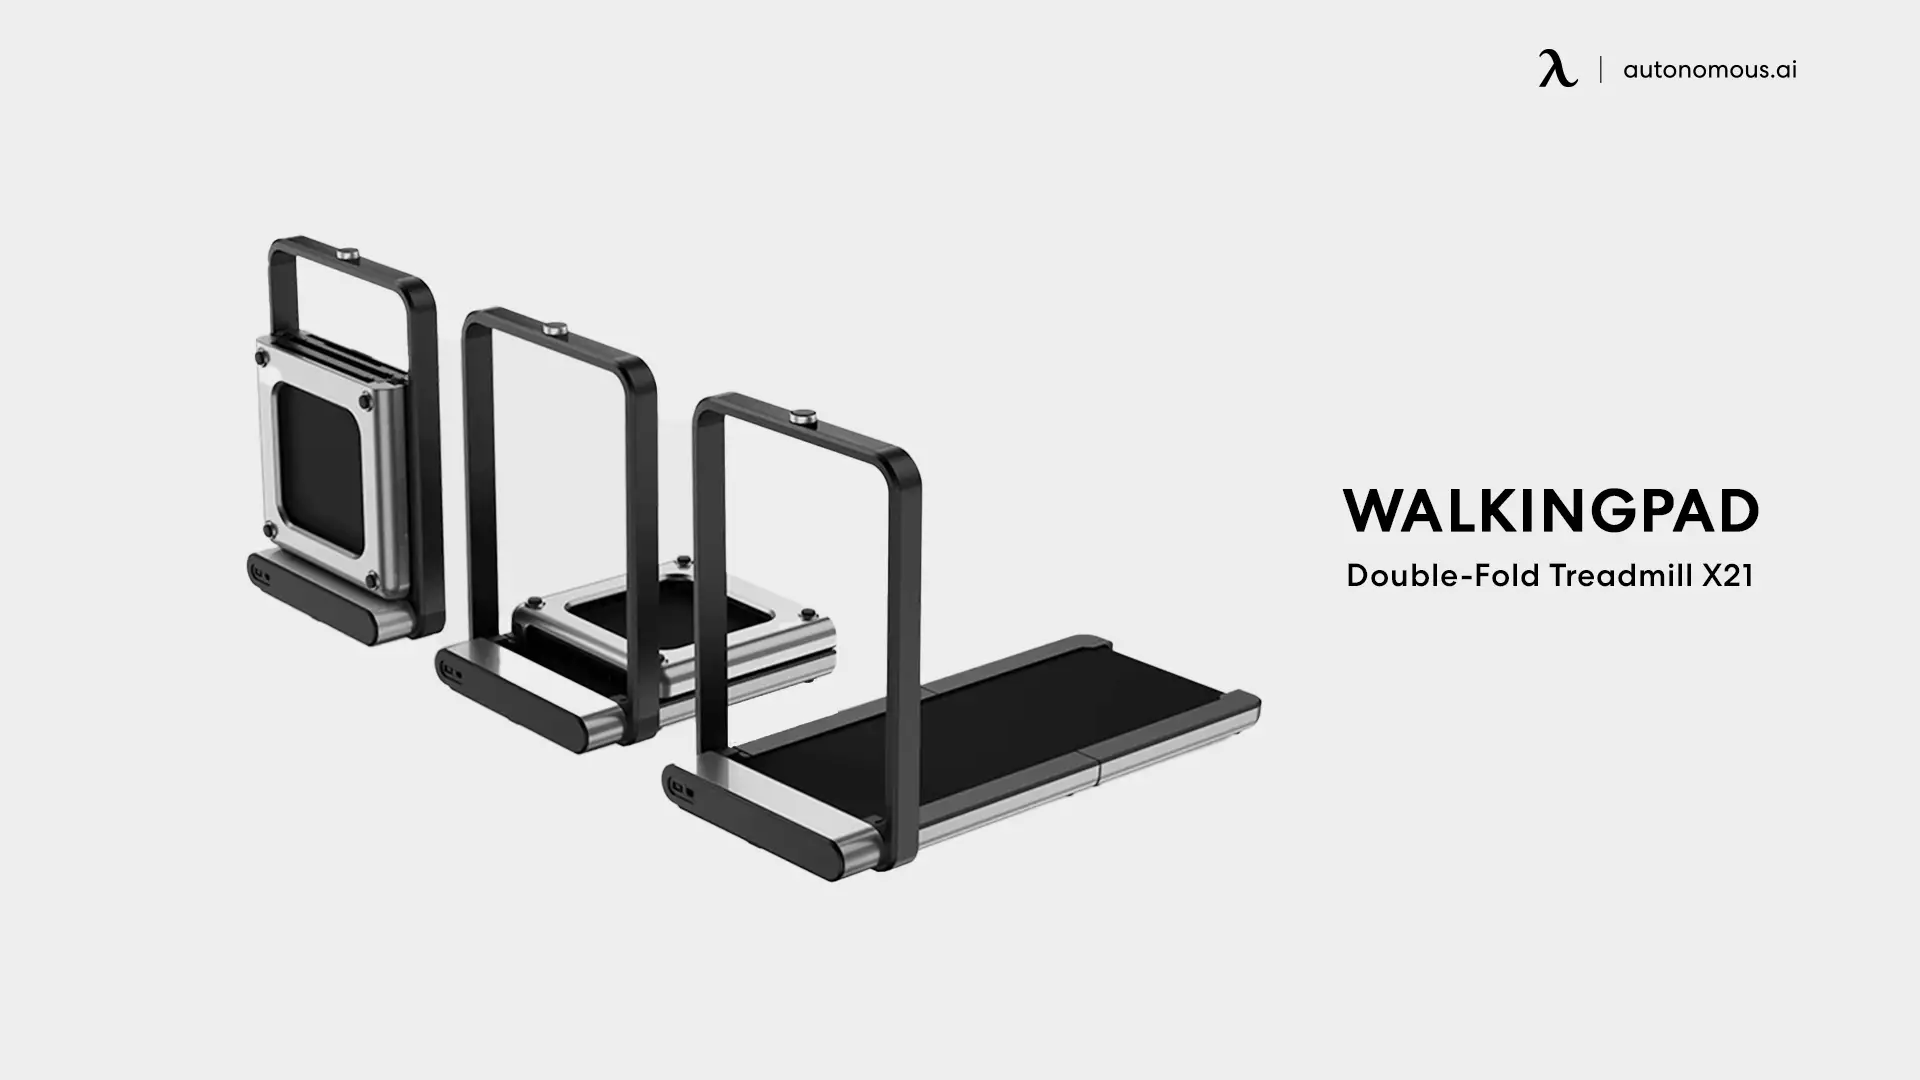 Double-Fold Treadmill X21 by WalkingPad